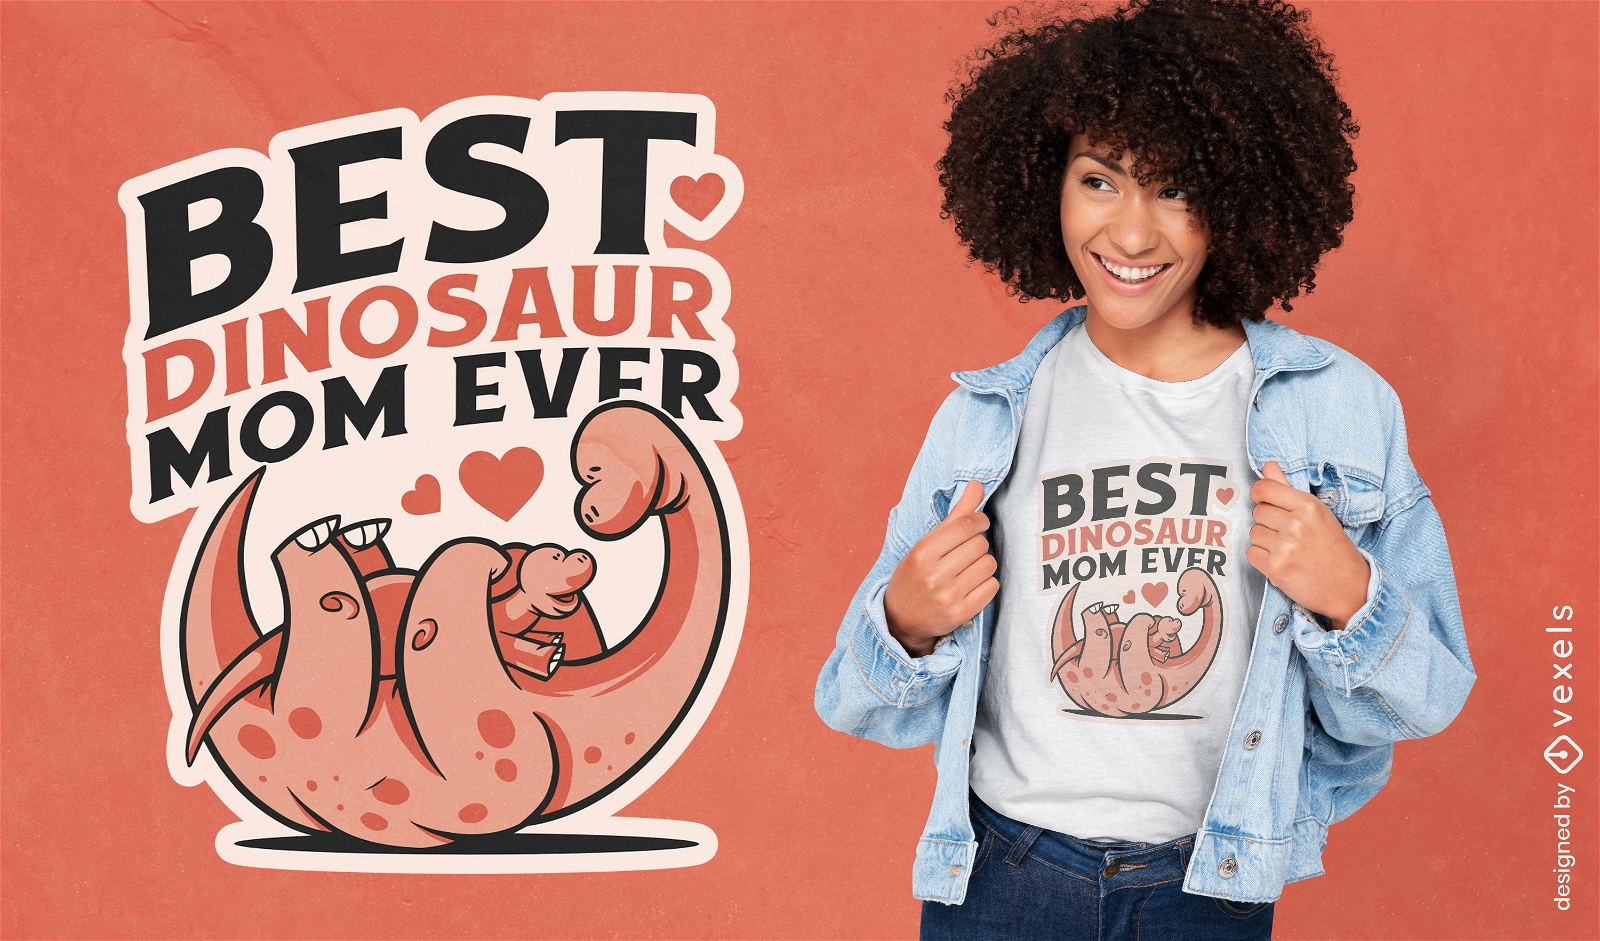 Best dinosaur mom cute t-shirt design